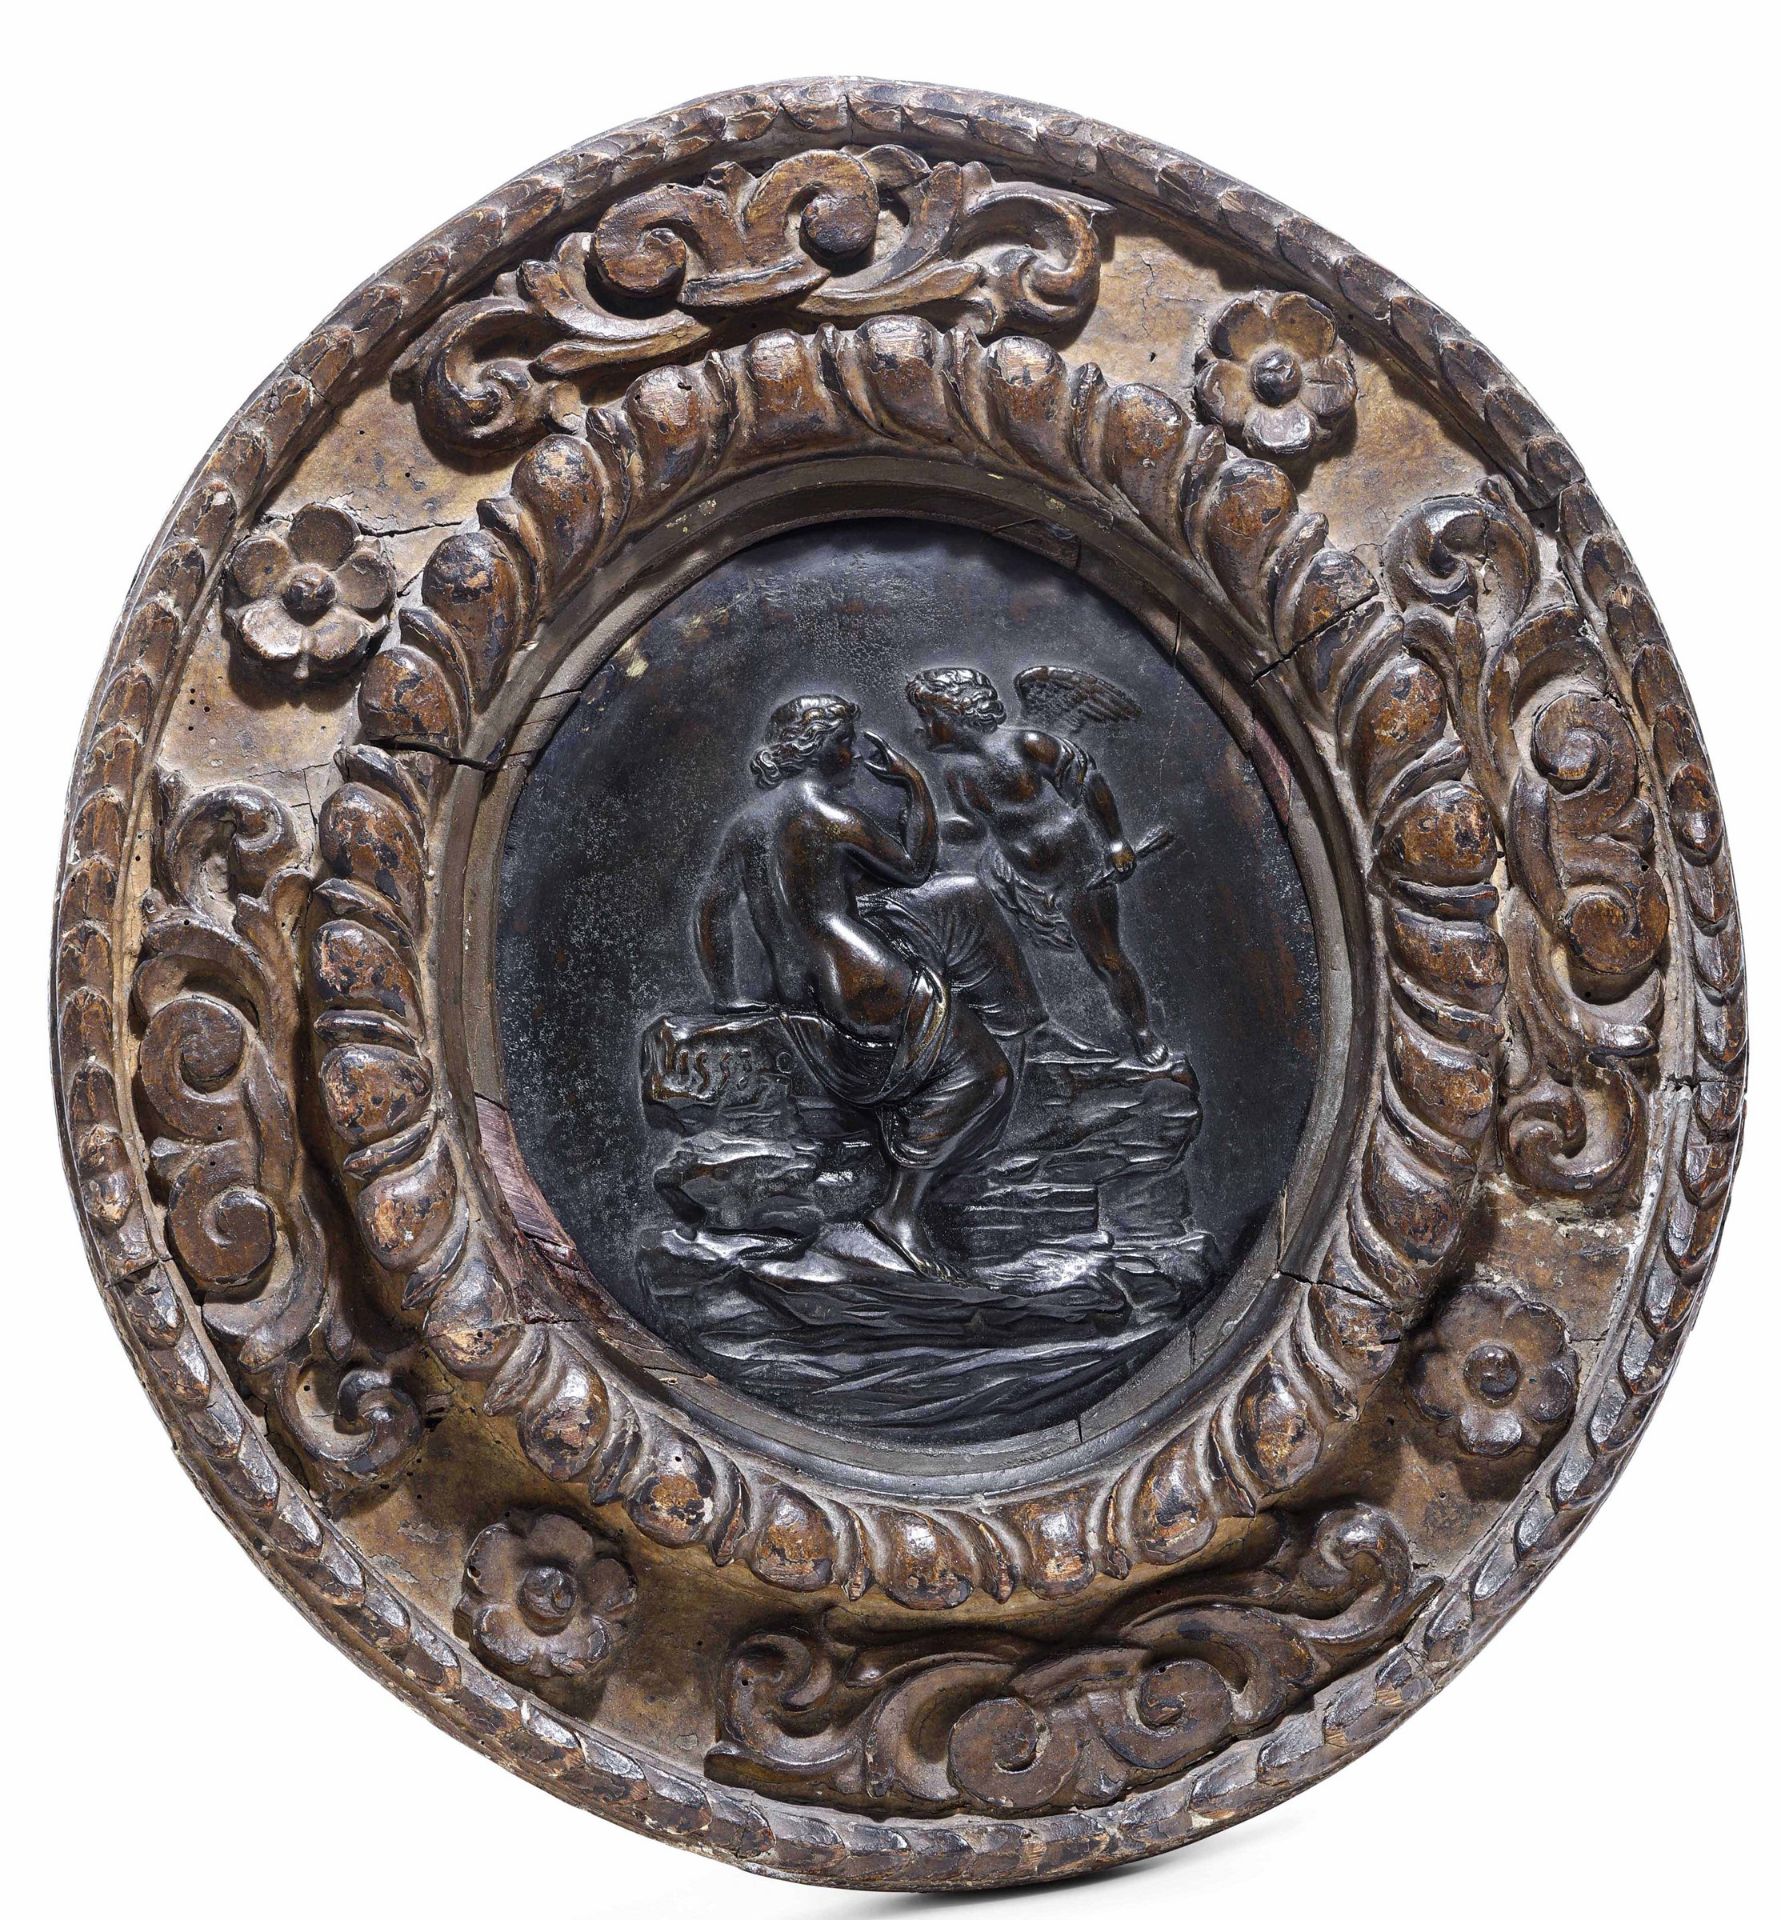 A bronze plaque, attr. D. Van Tetroder, Rome, 1553 - cm 27x25,5, cornice cm 54x50 [...]